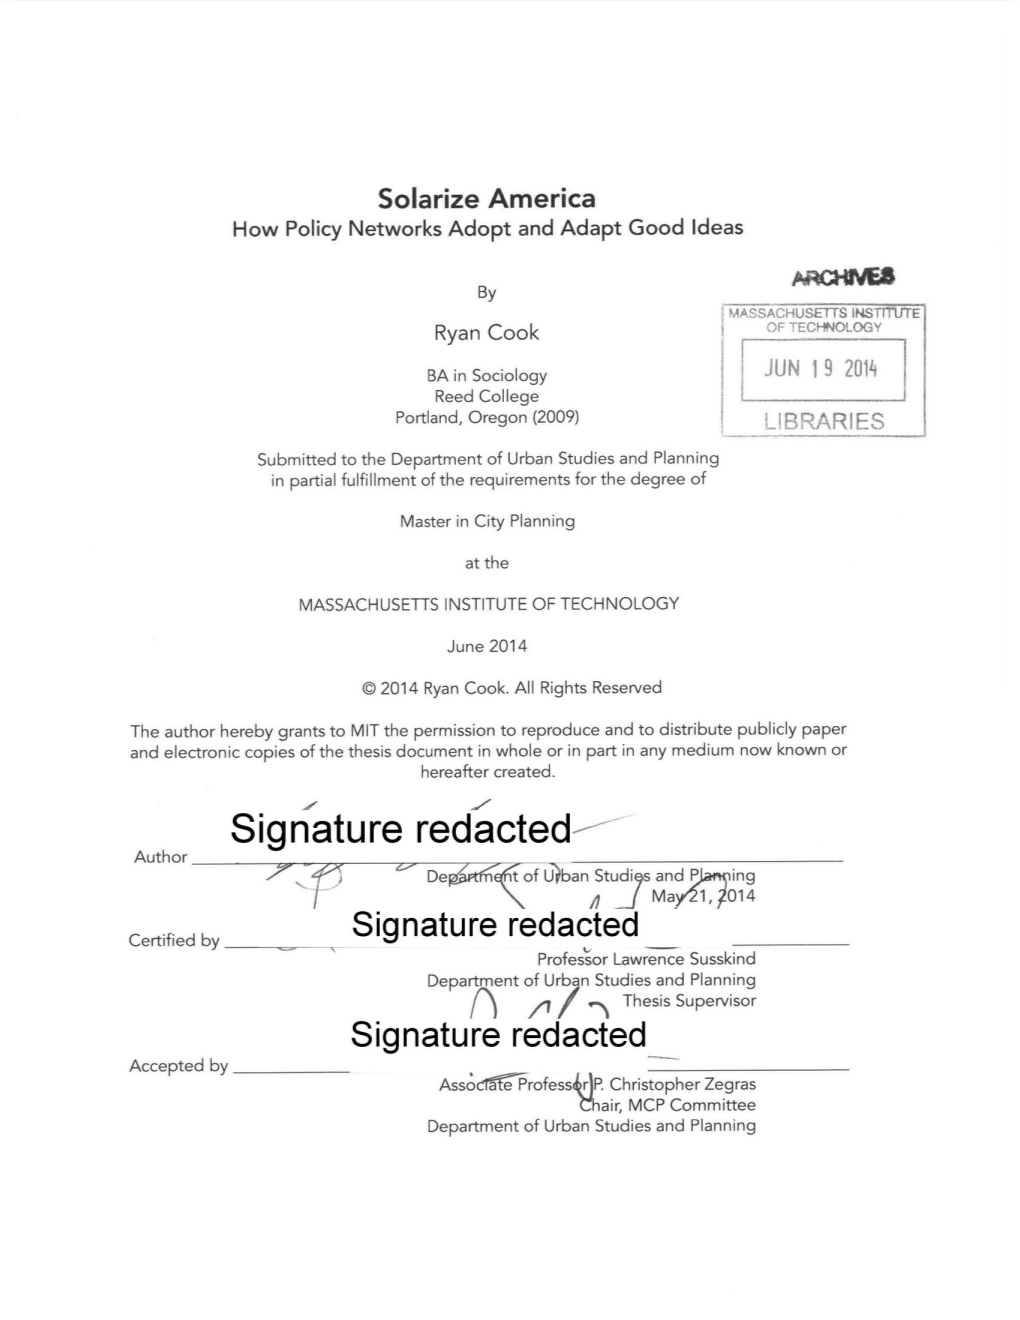 Signature Redacted--" Author De T of U Ban S Tudi S and P F~Ing Ma 1, 014